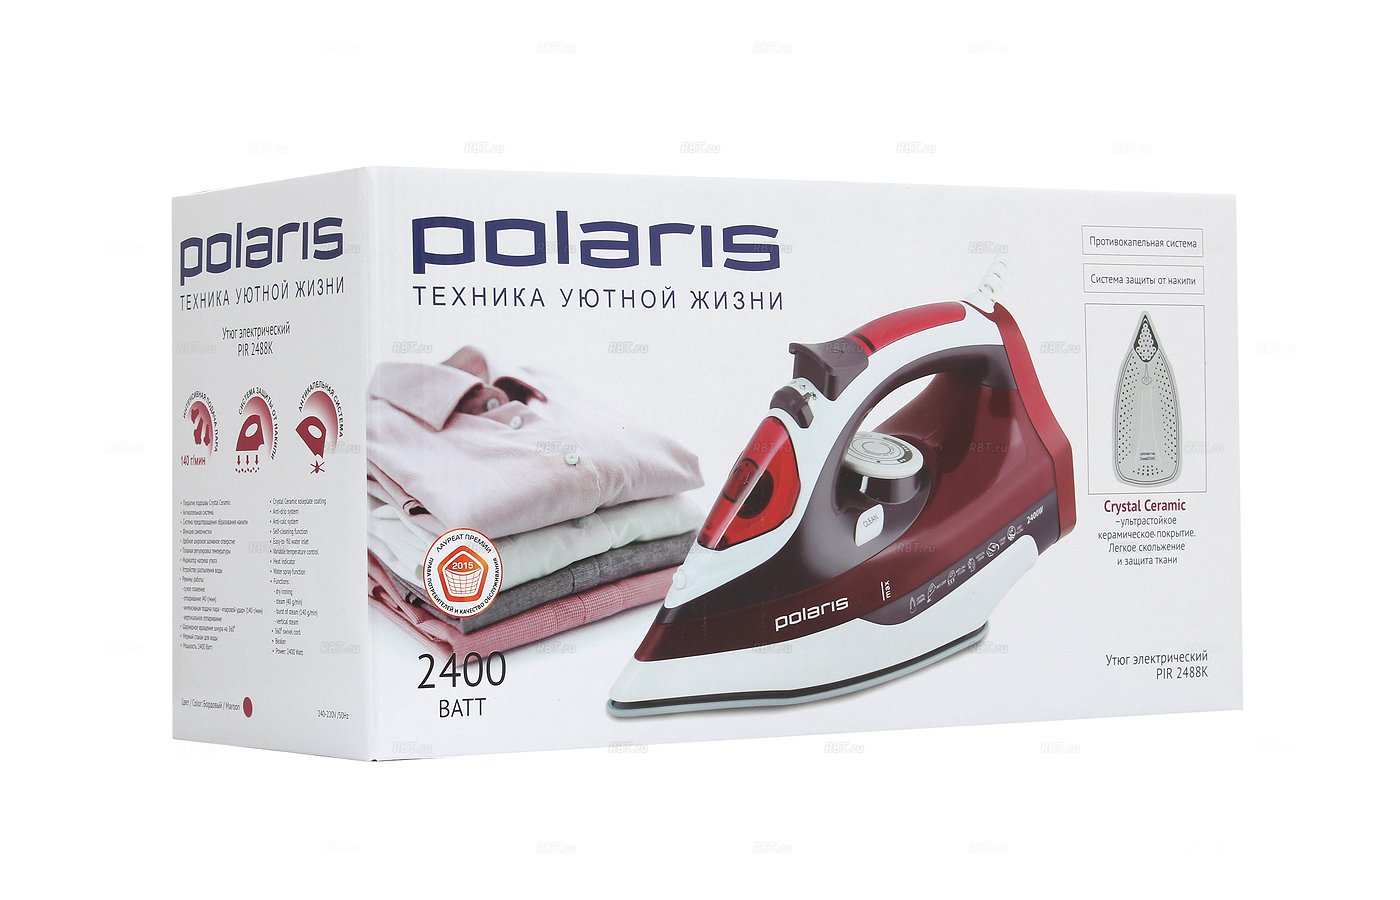 Polaris производитель. Polaris pir2488k. Polaris PIR 2415k. Паровой утюг Поларис красный. Полярис техника.